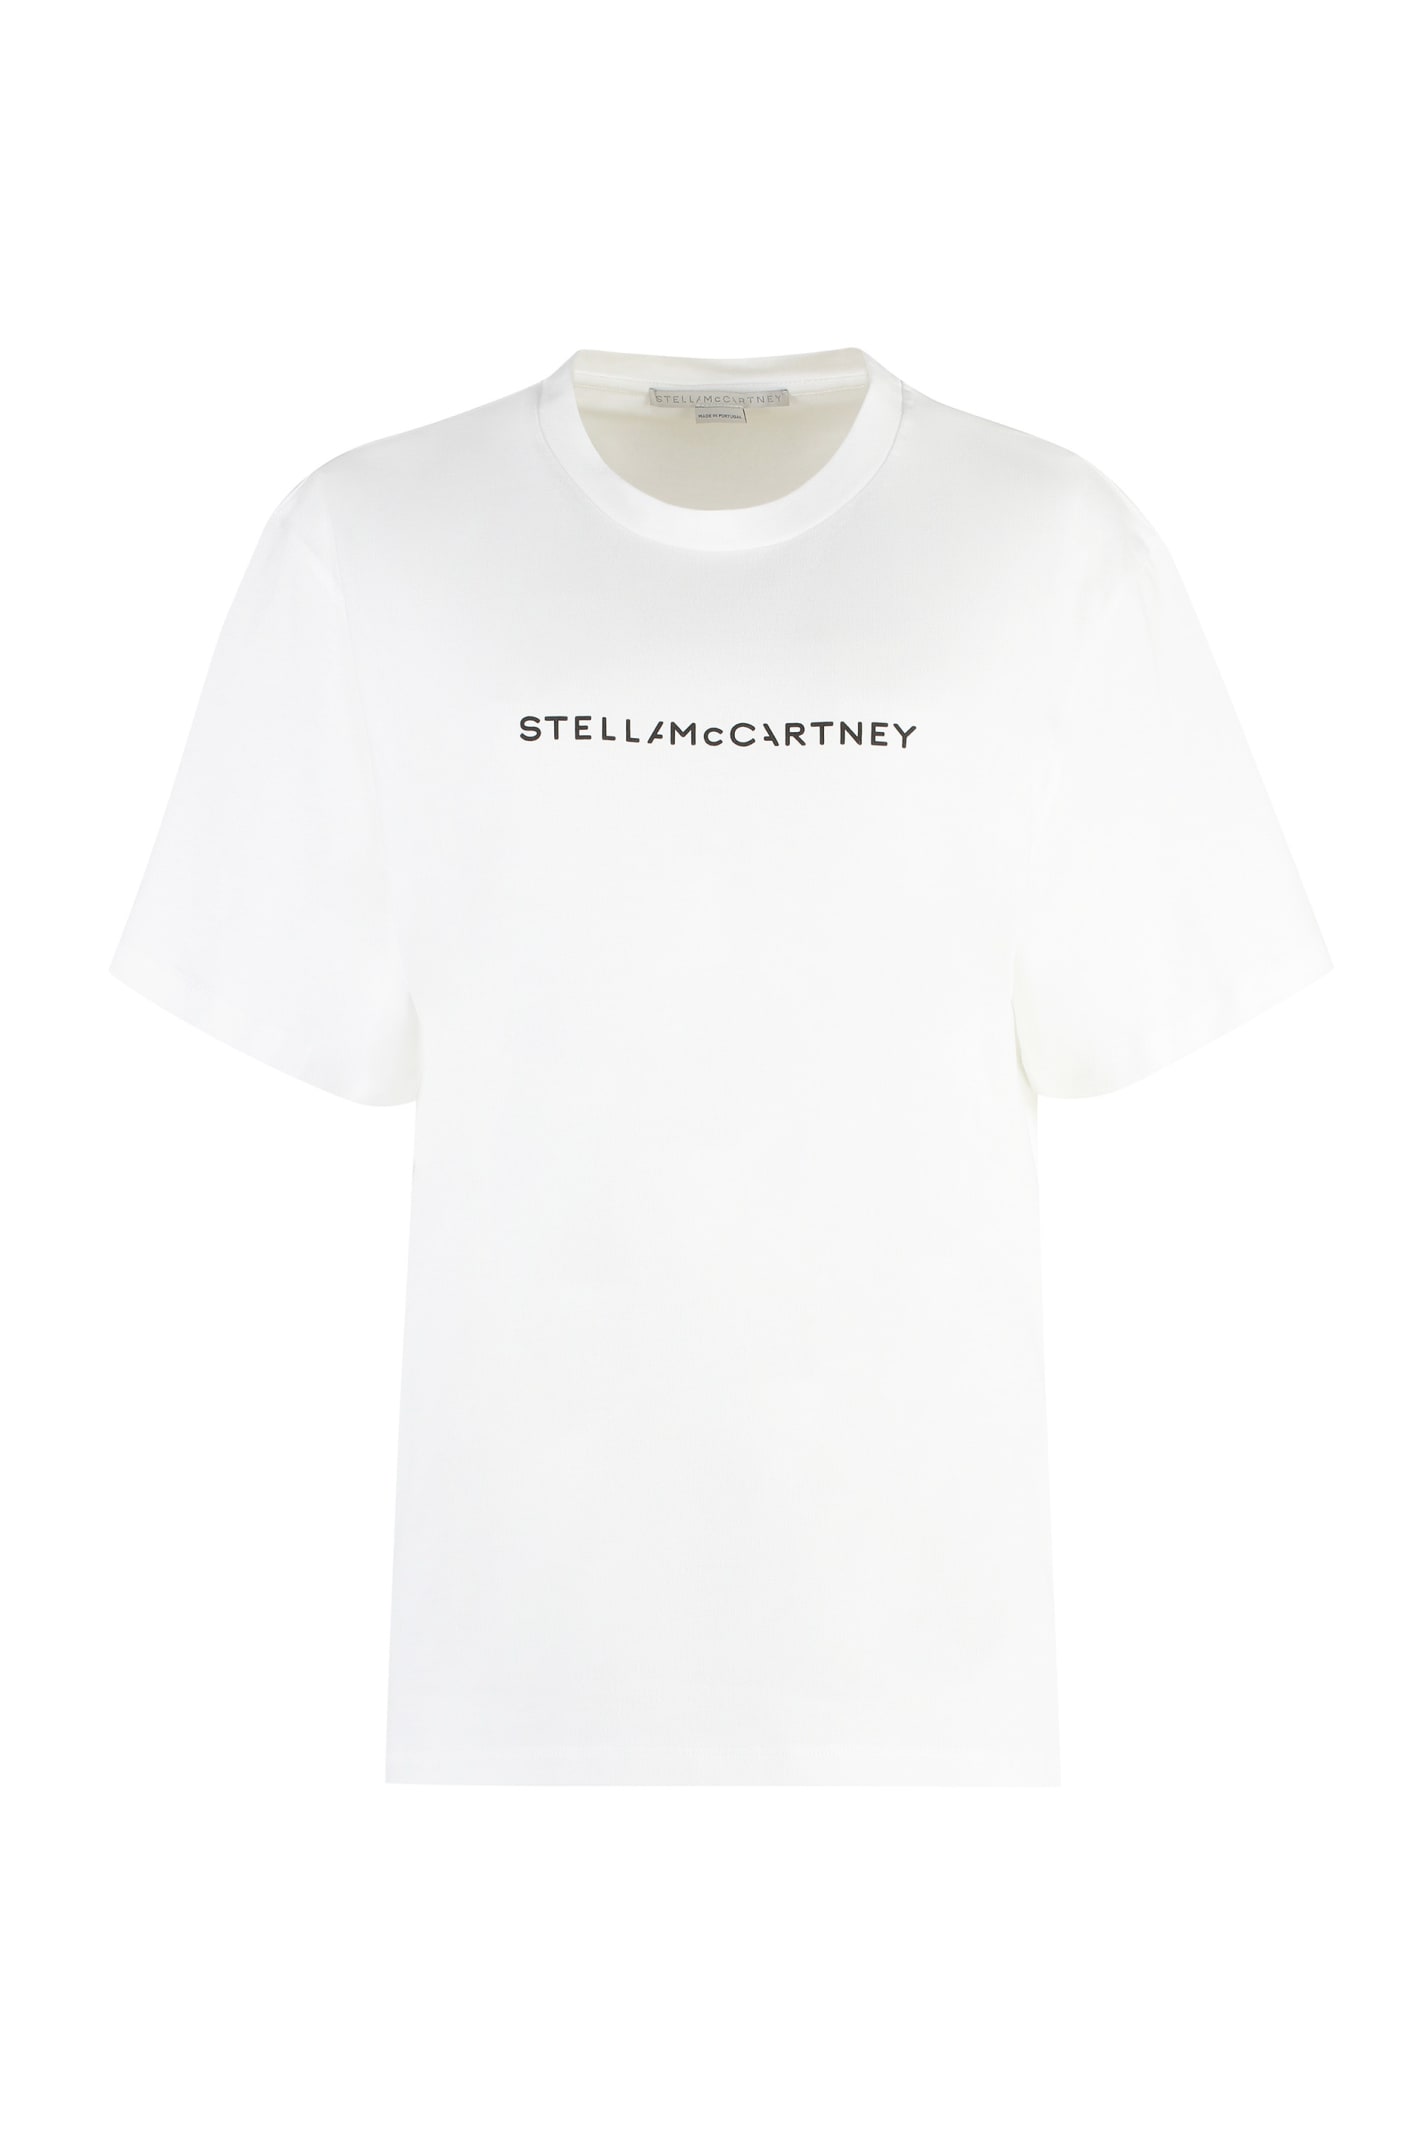 Stella Mccartney Iconic Stella T-shirt In Pure White